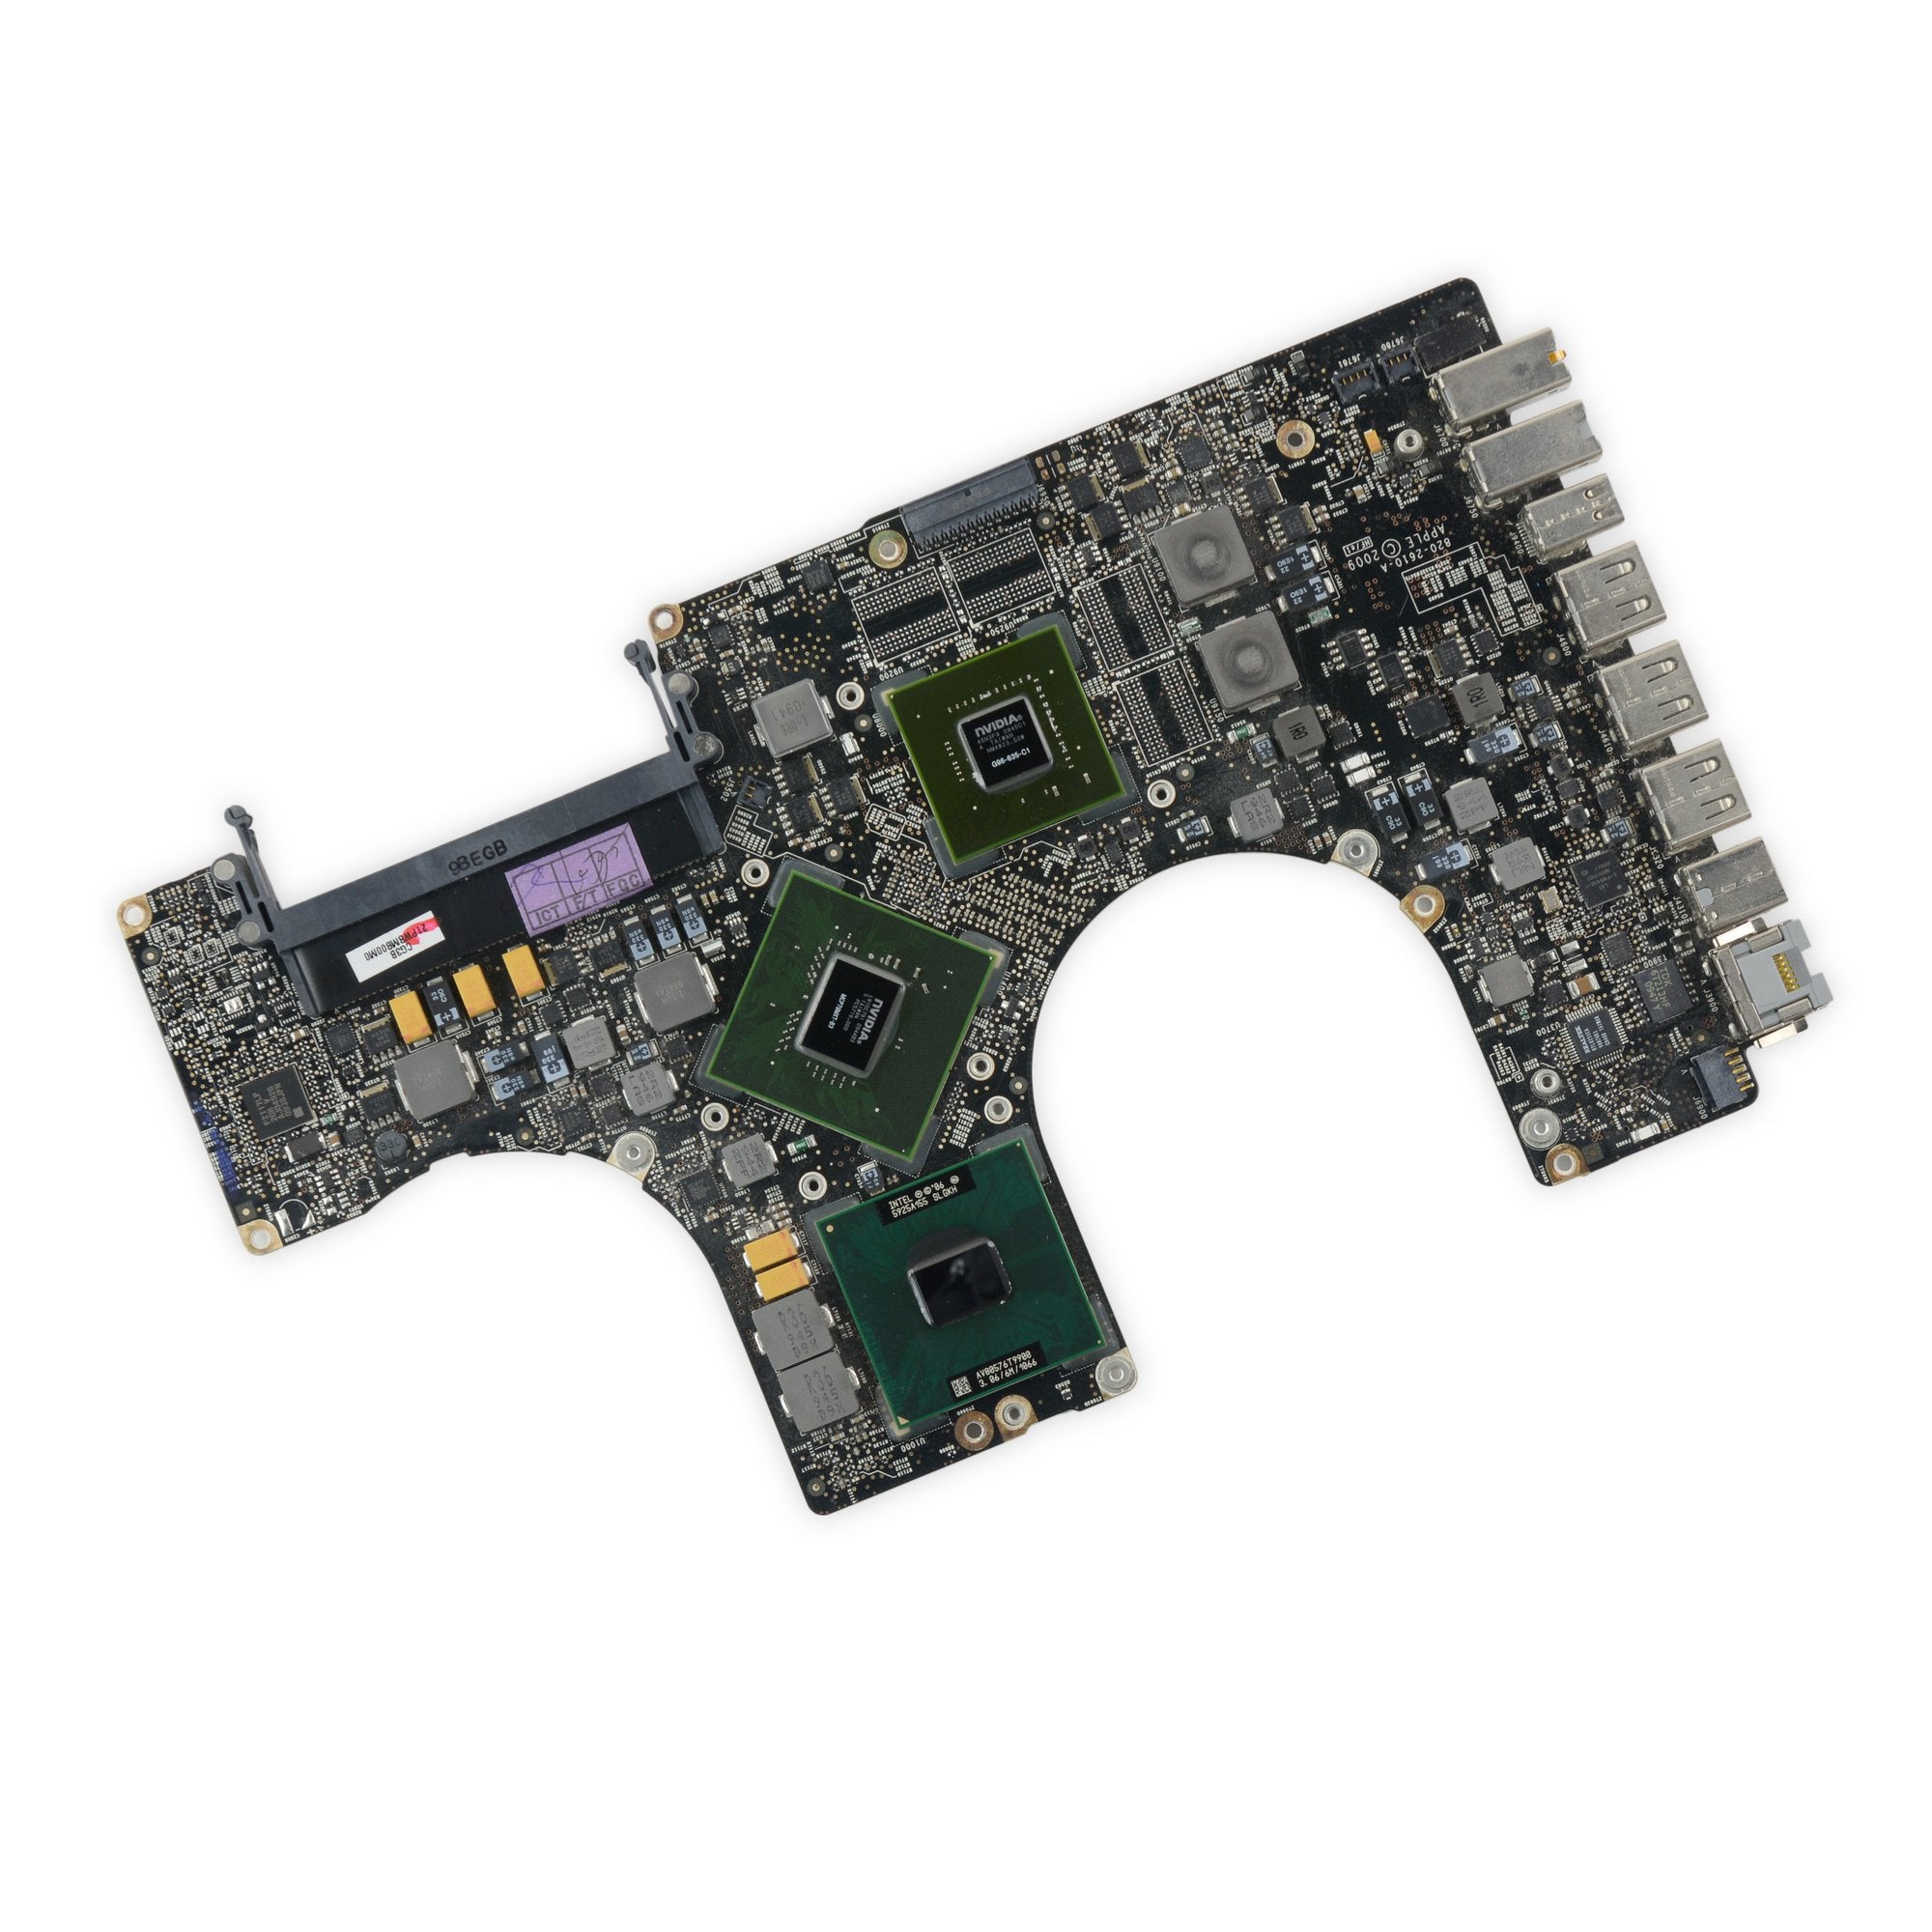 MacBook Pro 17" Unibody (Mid 2009) 3.06 GHz Logic Board